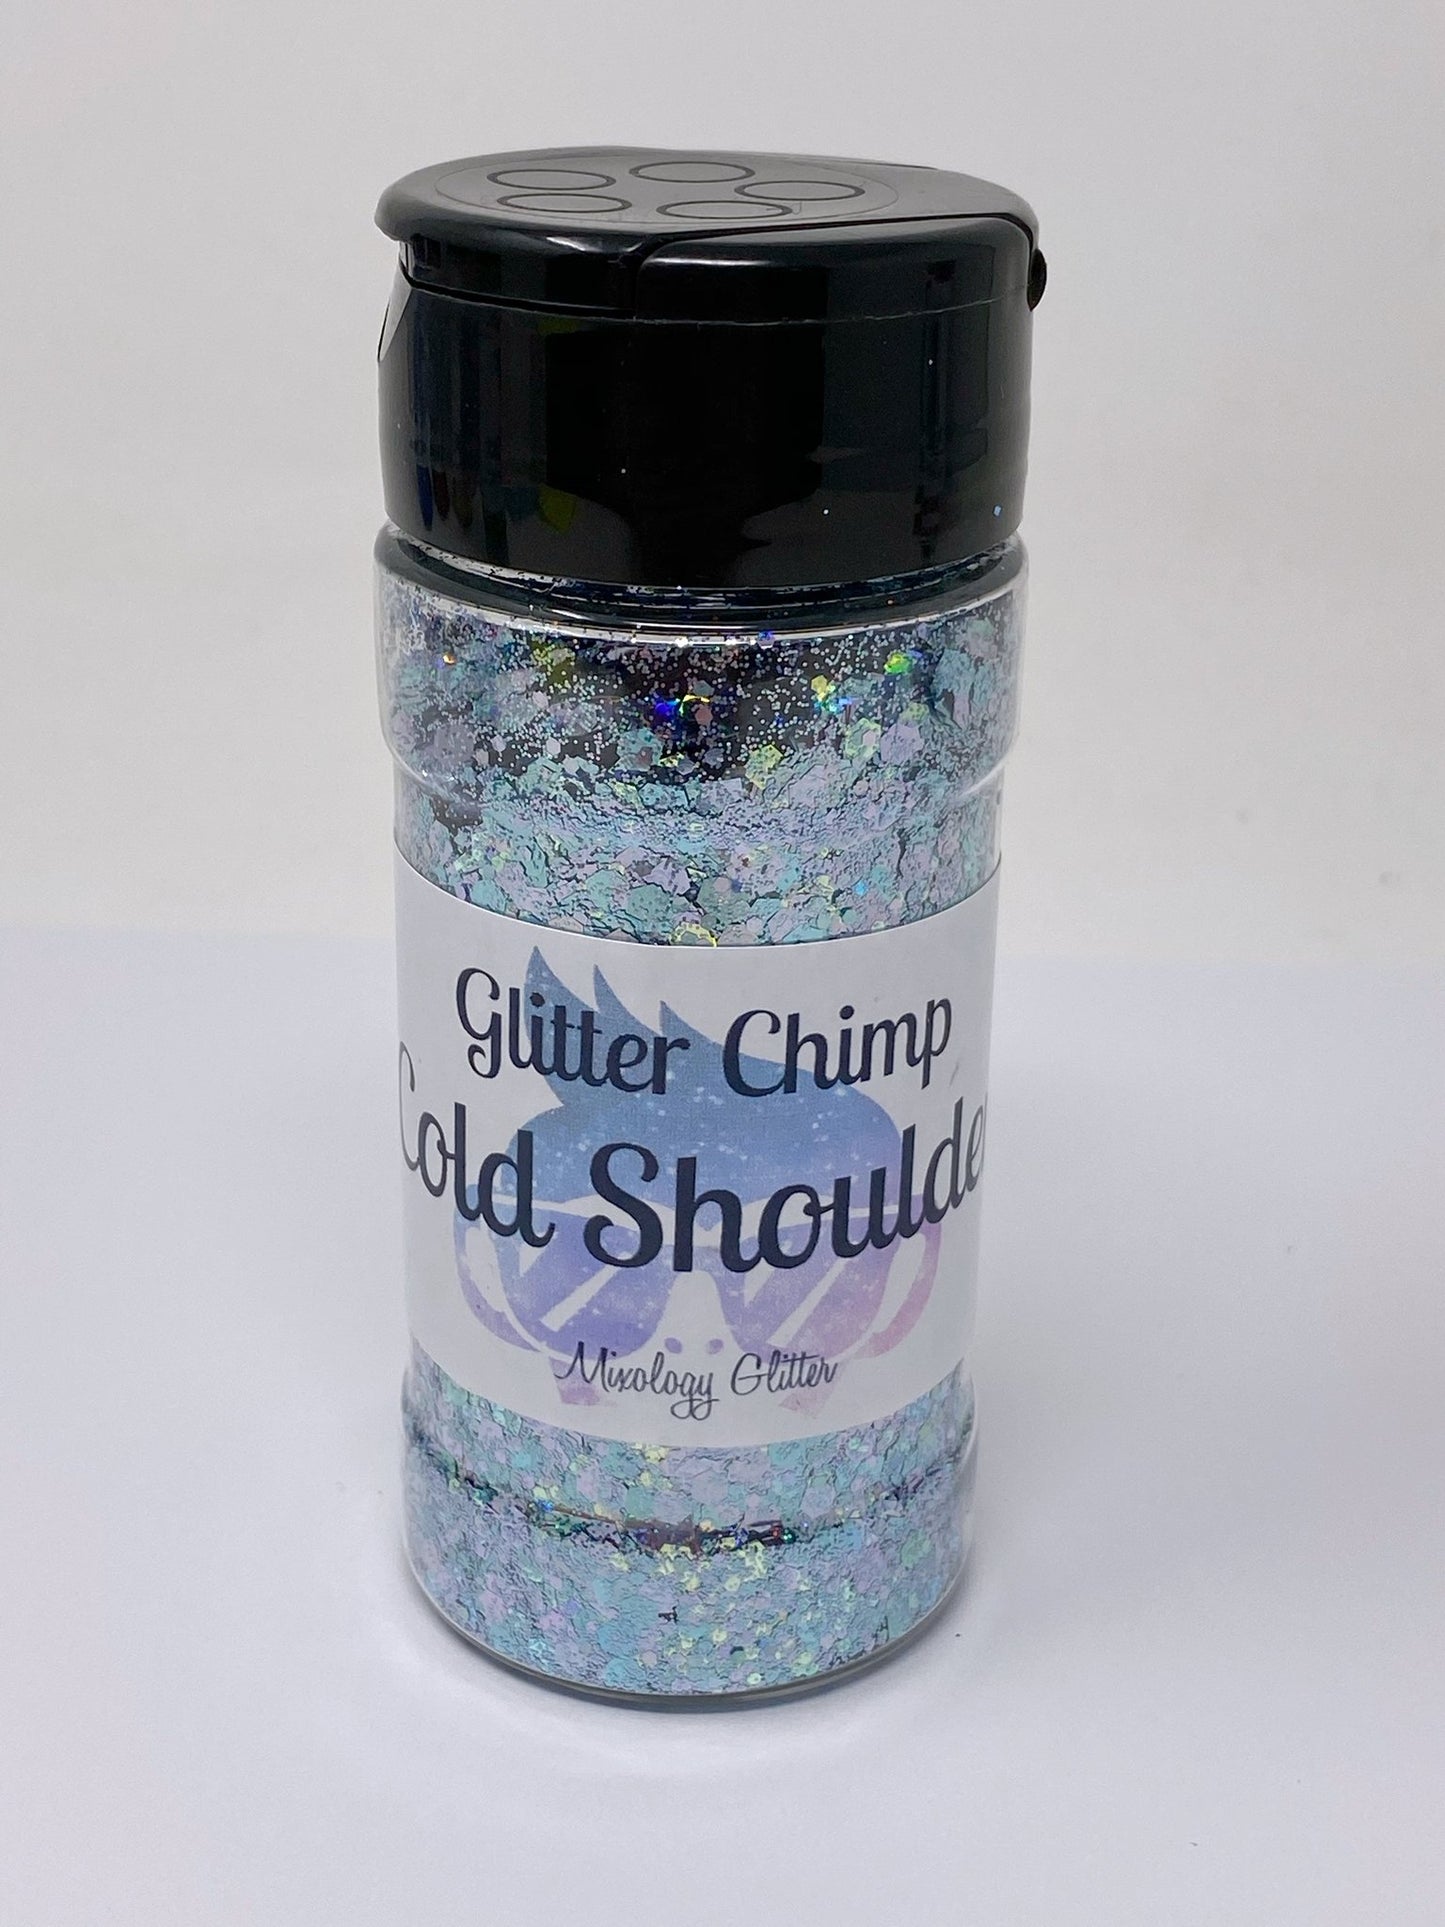 Glitter Chimp  Cold Shoulder Mixology Glitter CLEARANCE